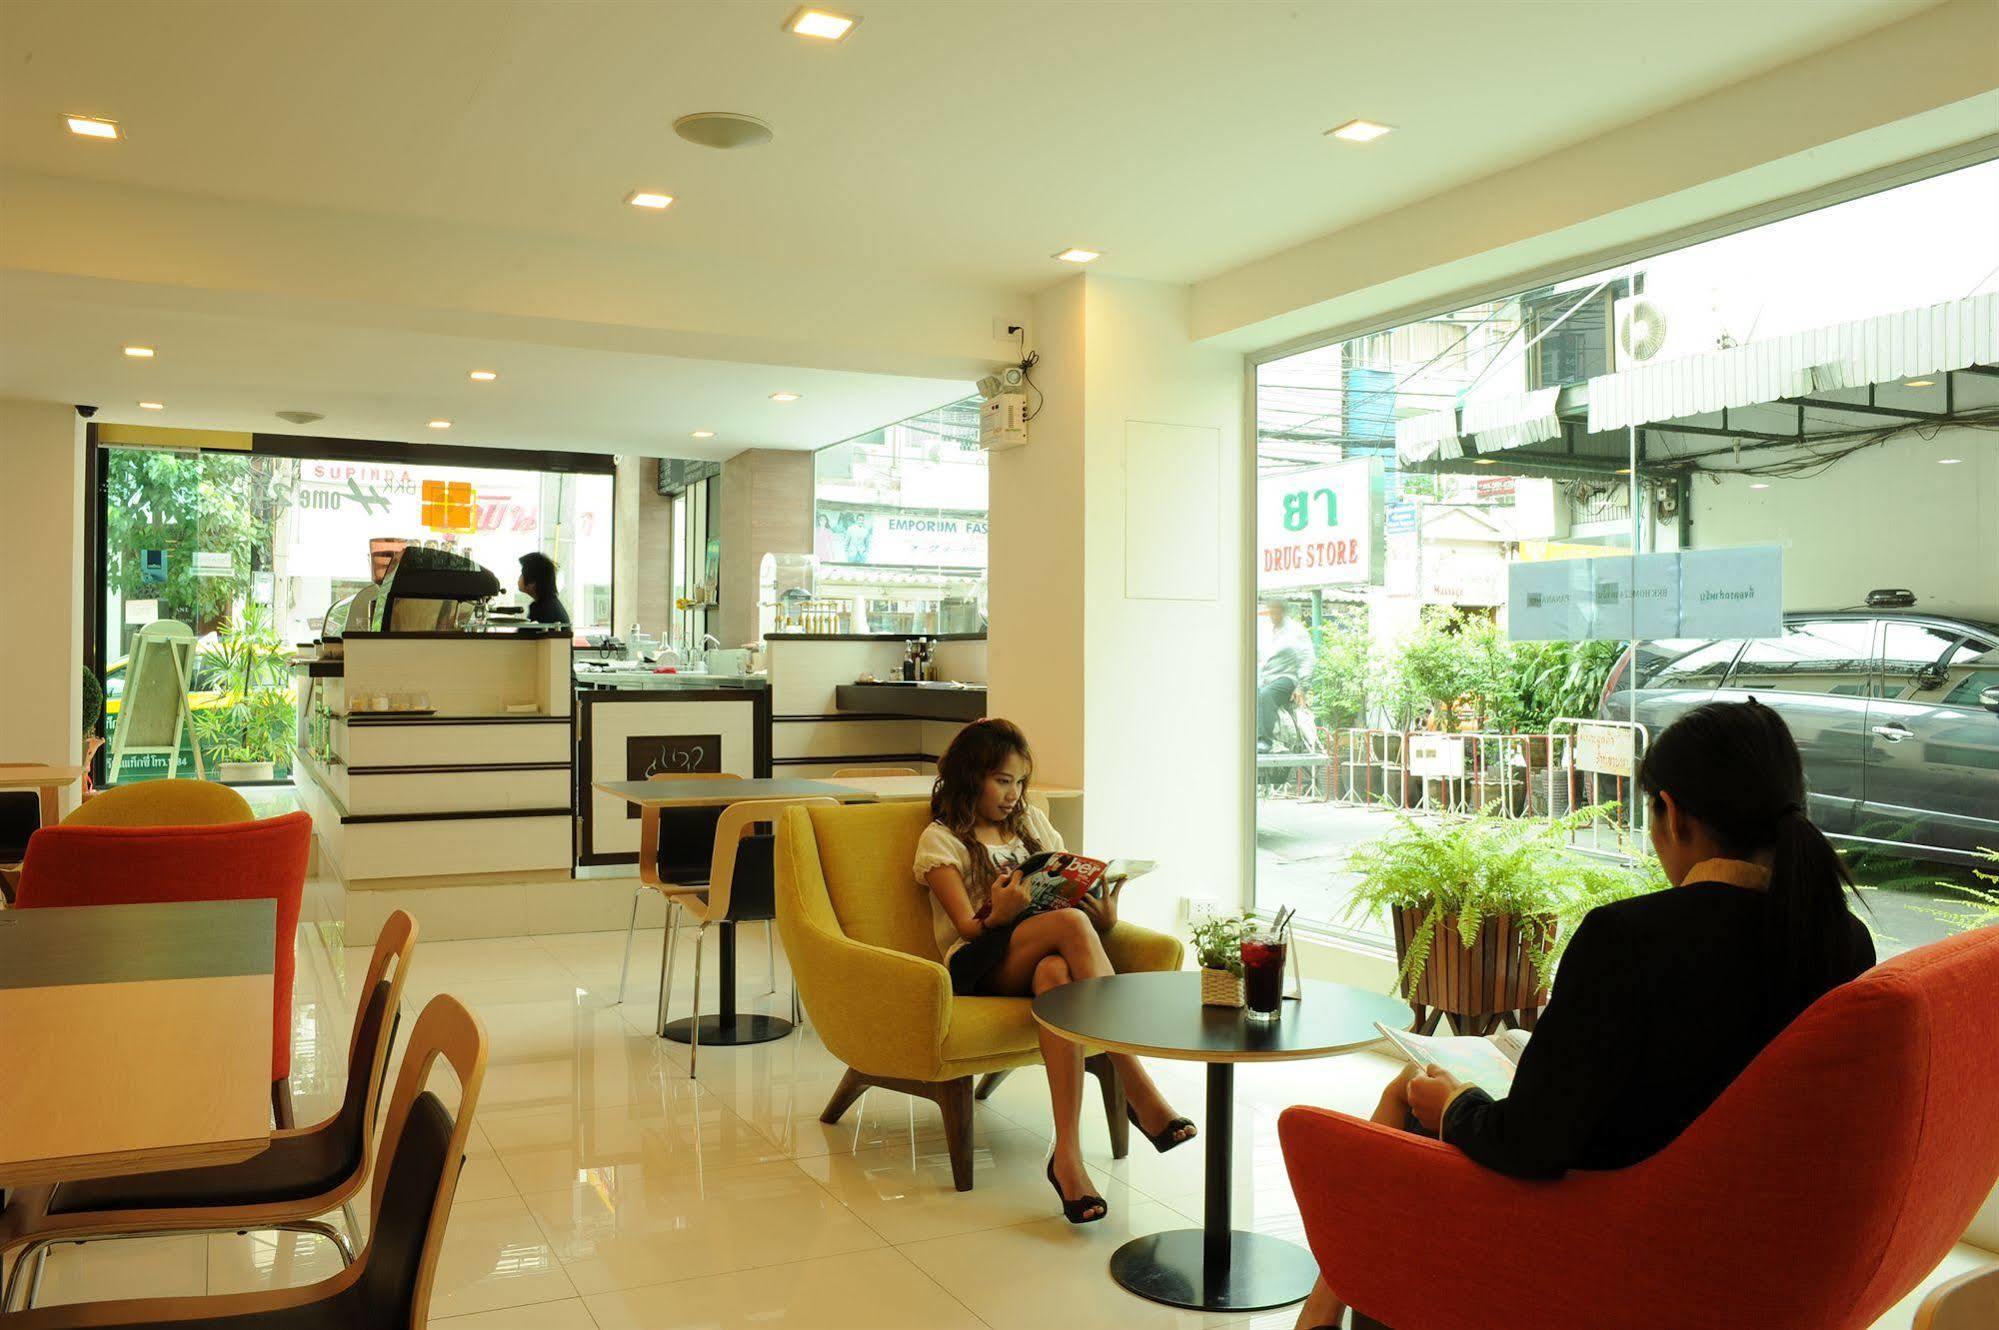 Bkk Home 24 Boutique Hotel Bangkok Dış mekan fotoğraf